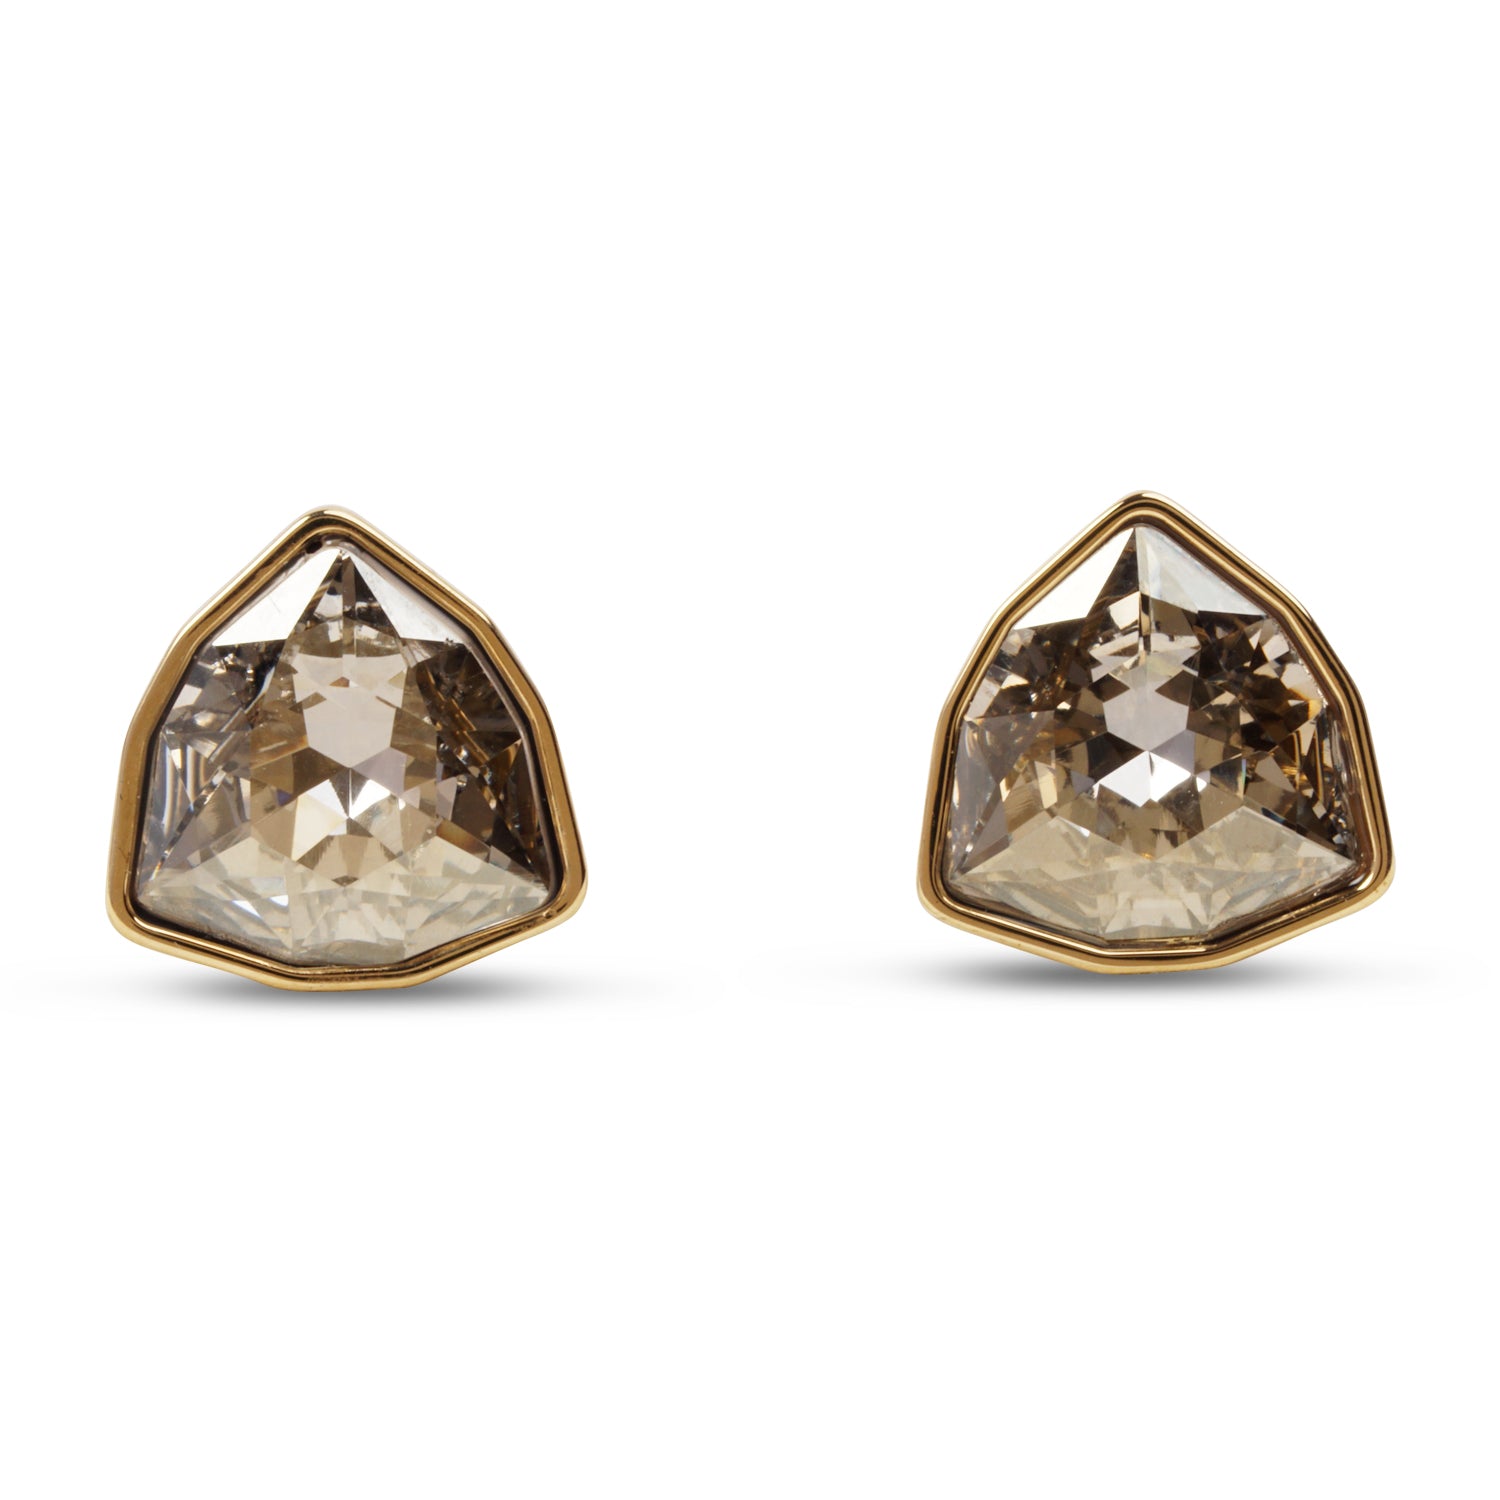 Champagne Gold Swarovski Earrings made with Swarovski Crystal  925  Sterling Silver Drop Earrings  styleinshop